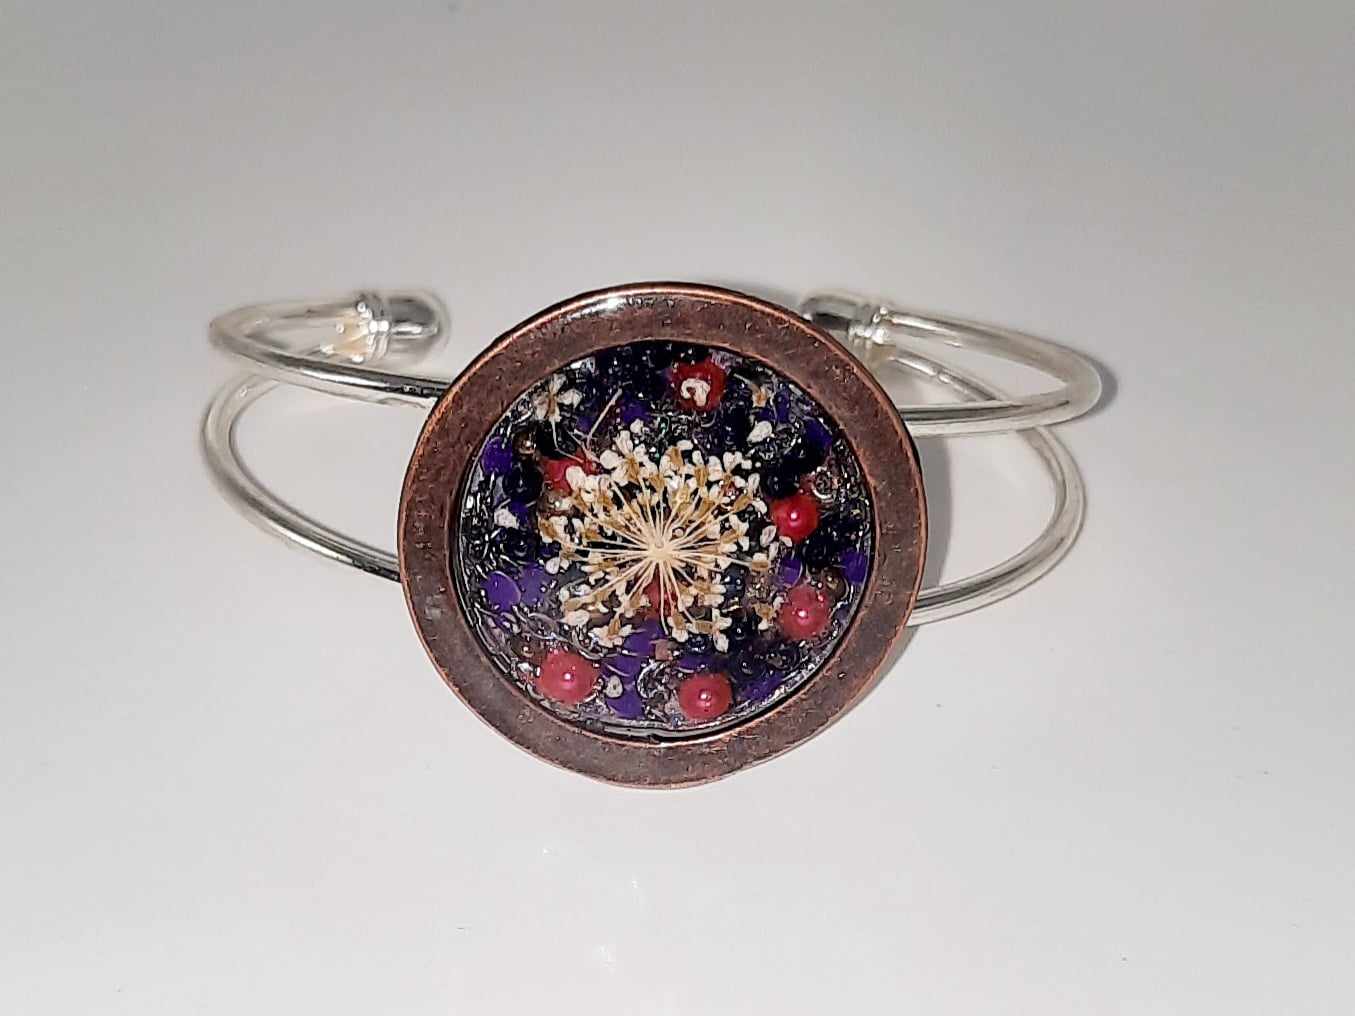 Handcrafted silver copper cuff bracelet by Josie's